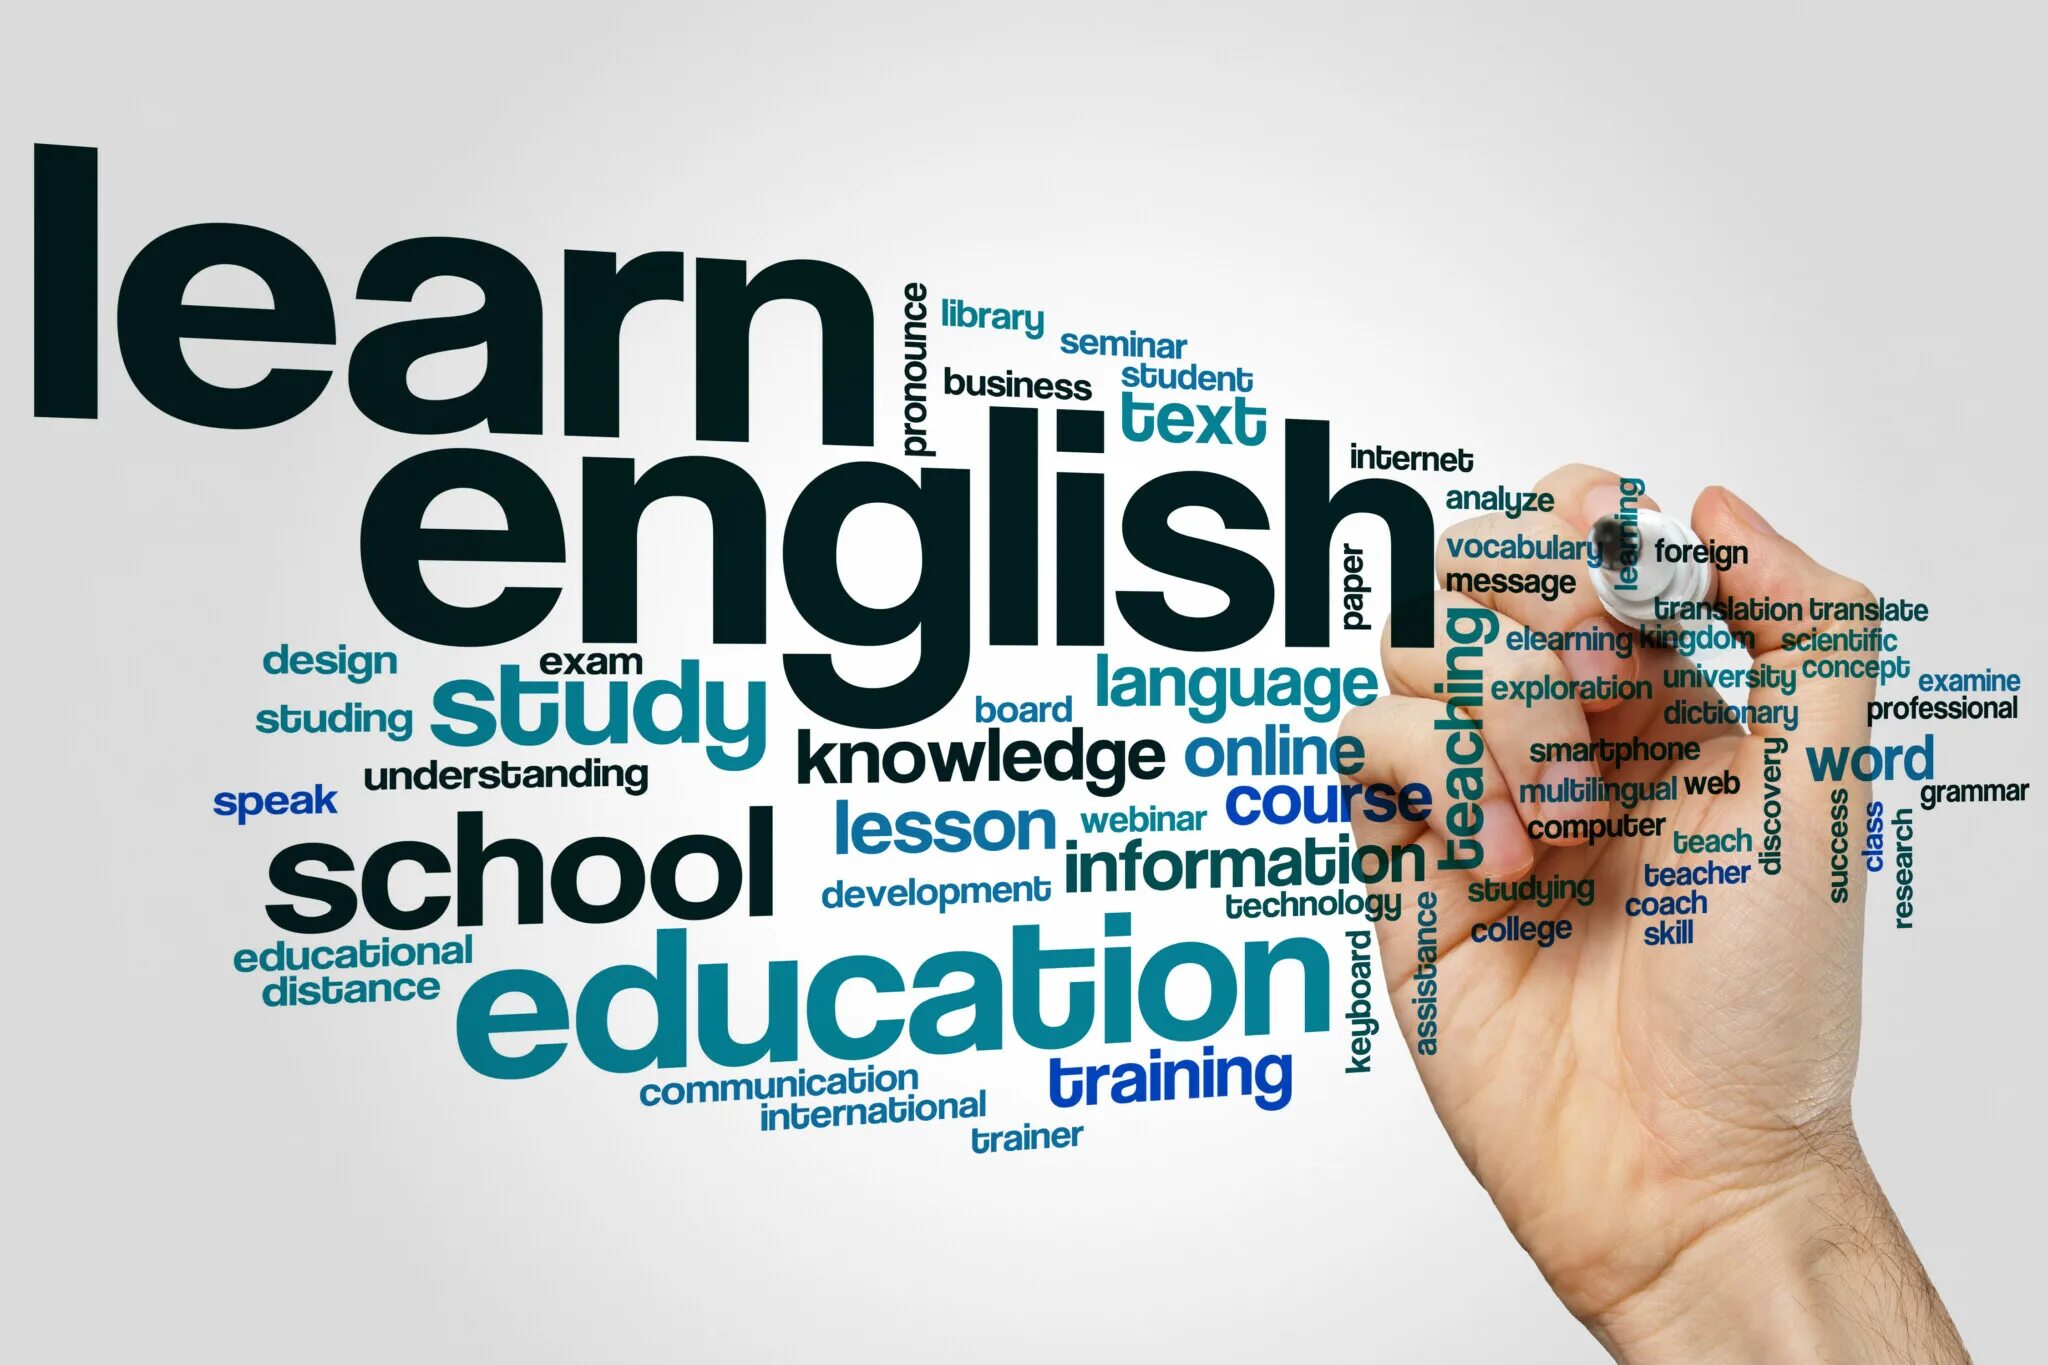 Text to learning english. Learn English. The English language. We learn English надпись. Learning English картинки.